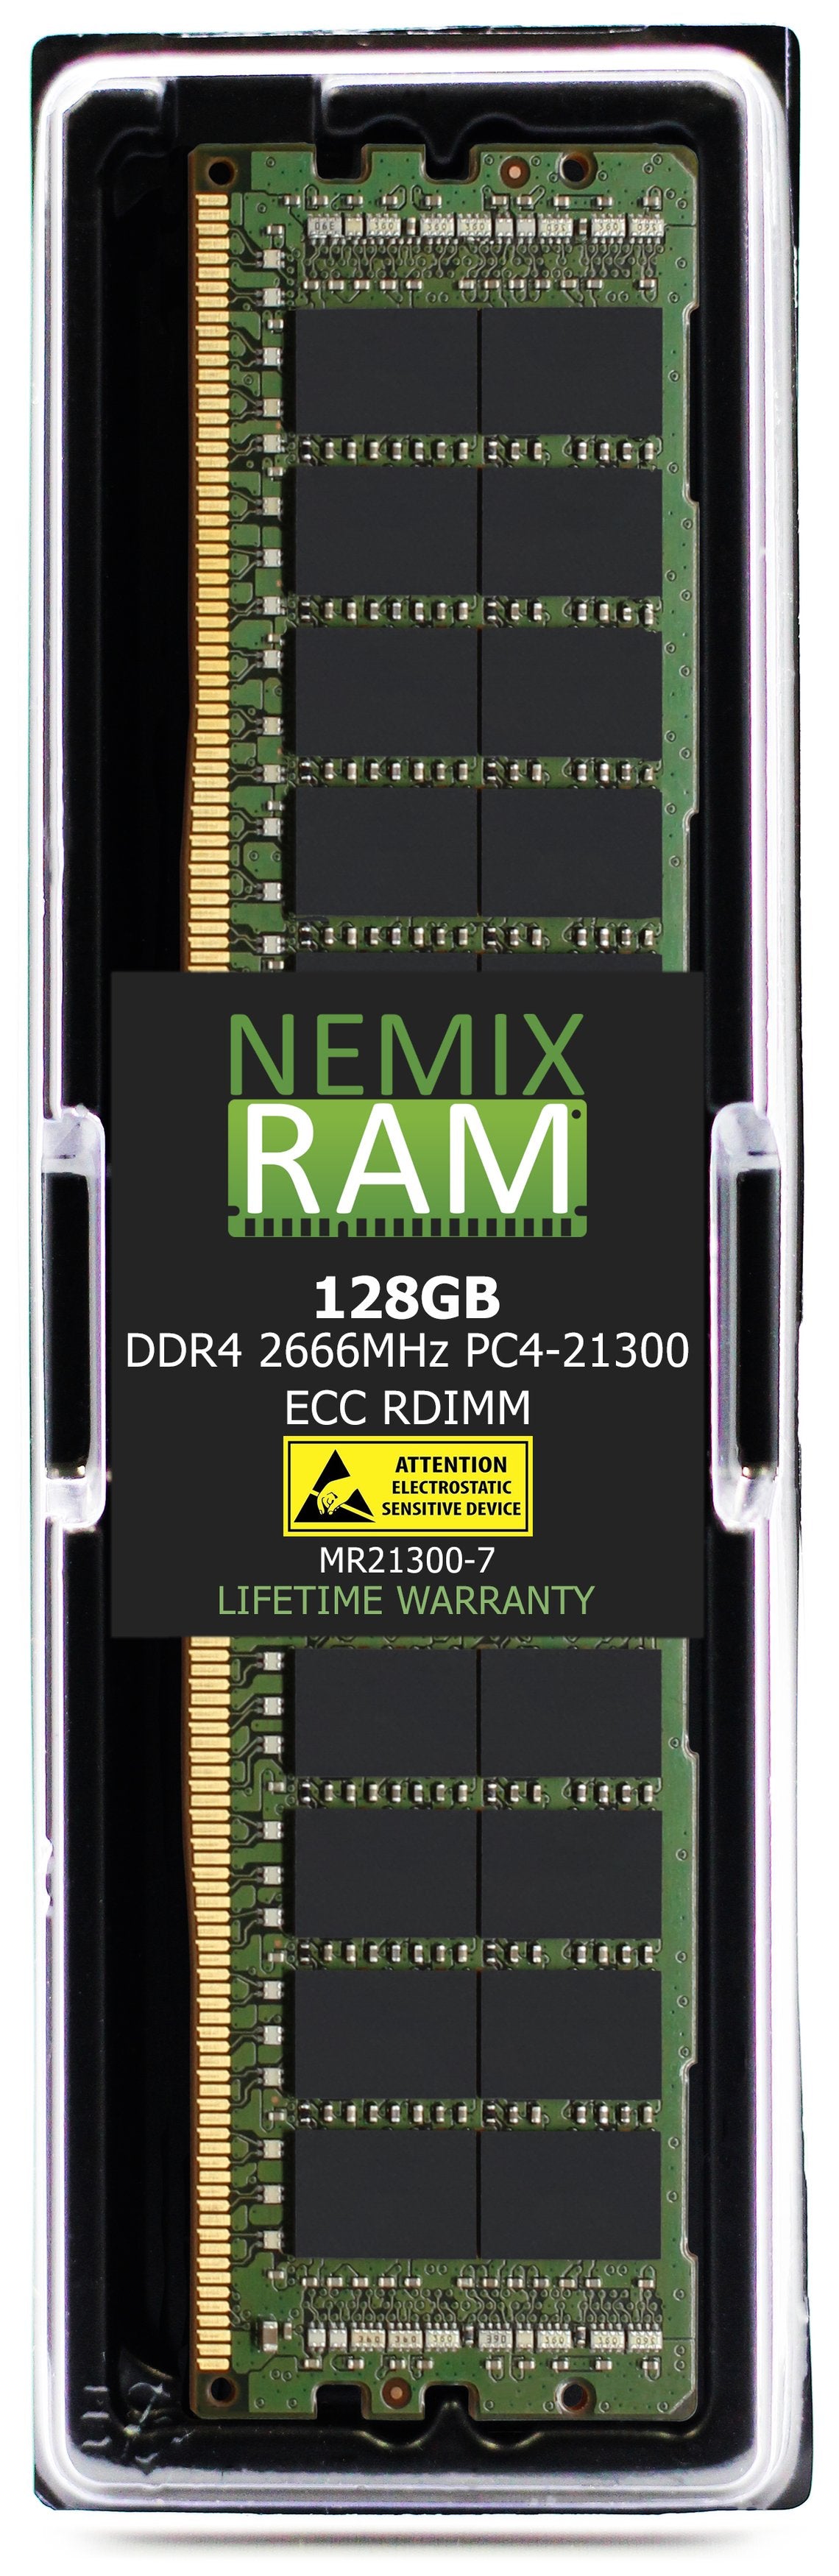 Hynix HMABAGR7C4R4N-VN 128GB DDR4 2666MHZ PC4-21300 RDIMM Compatible Memory Module